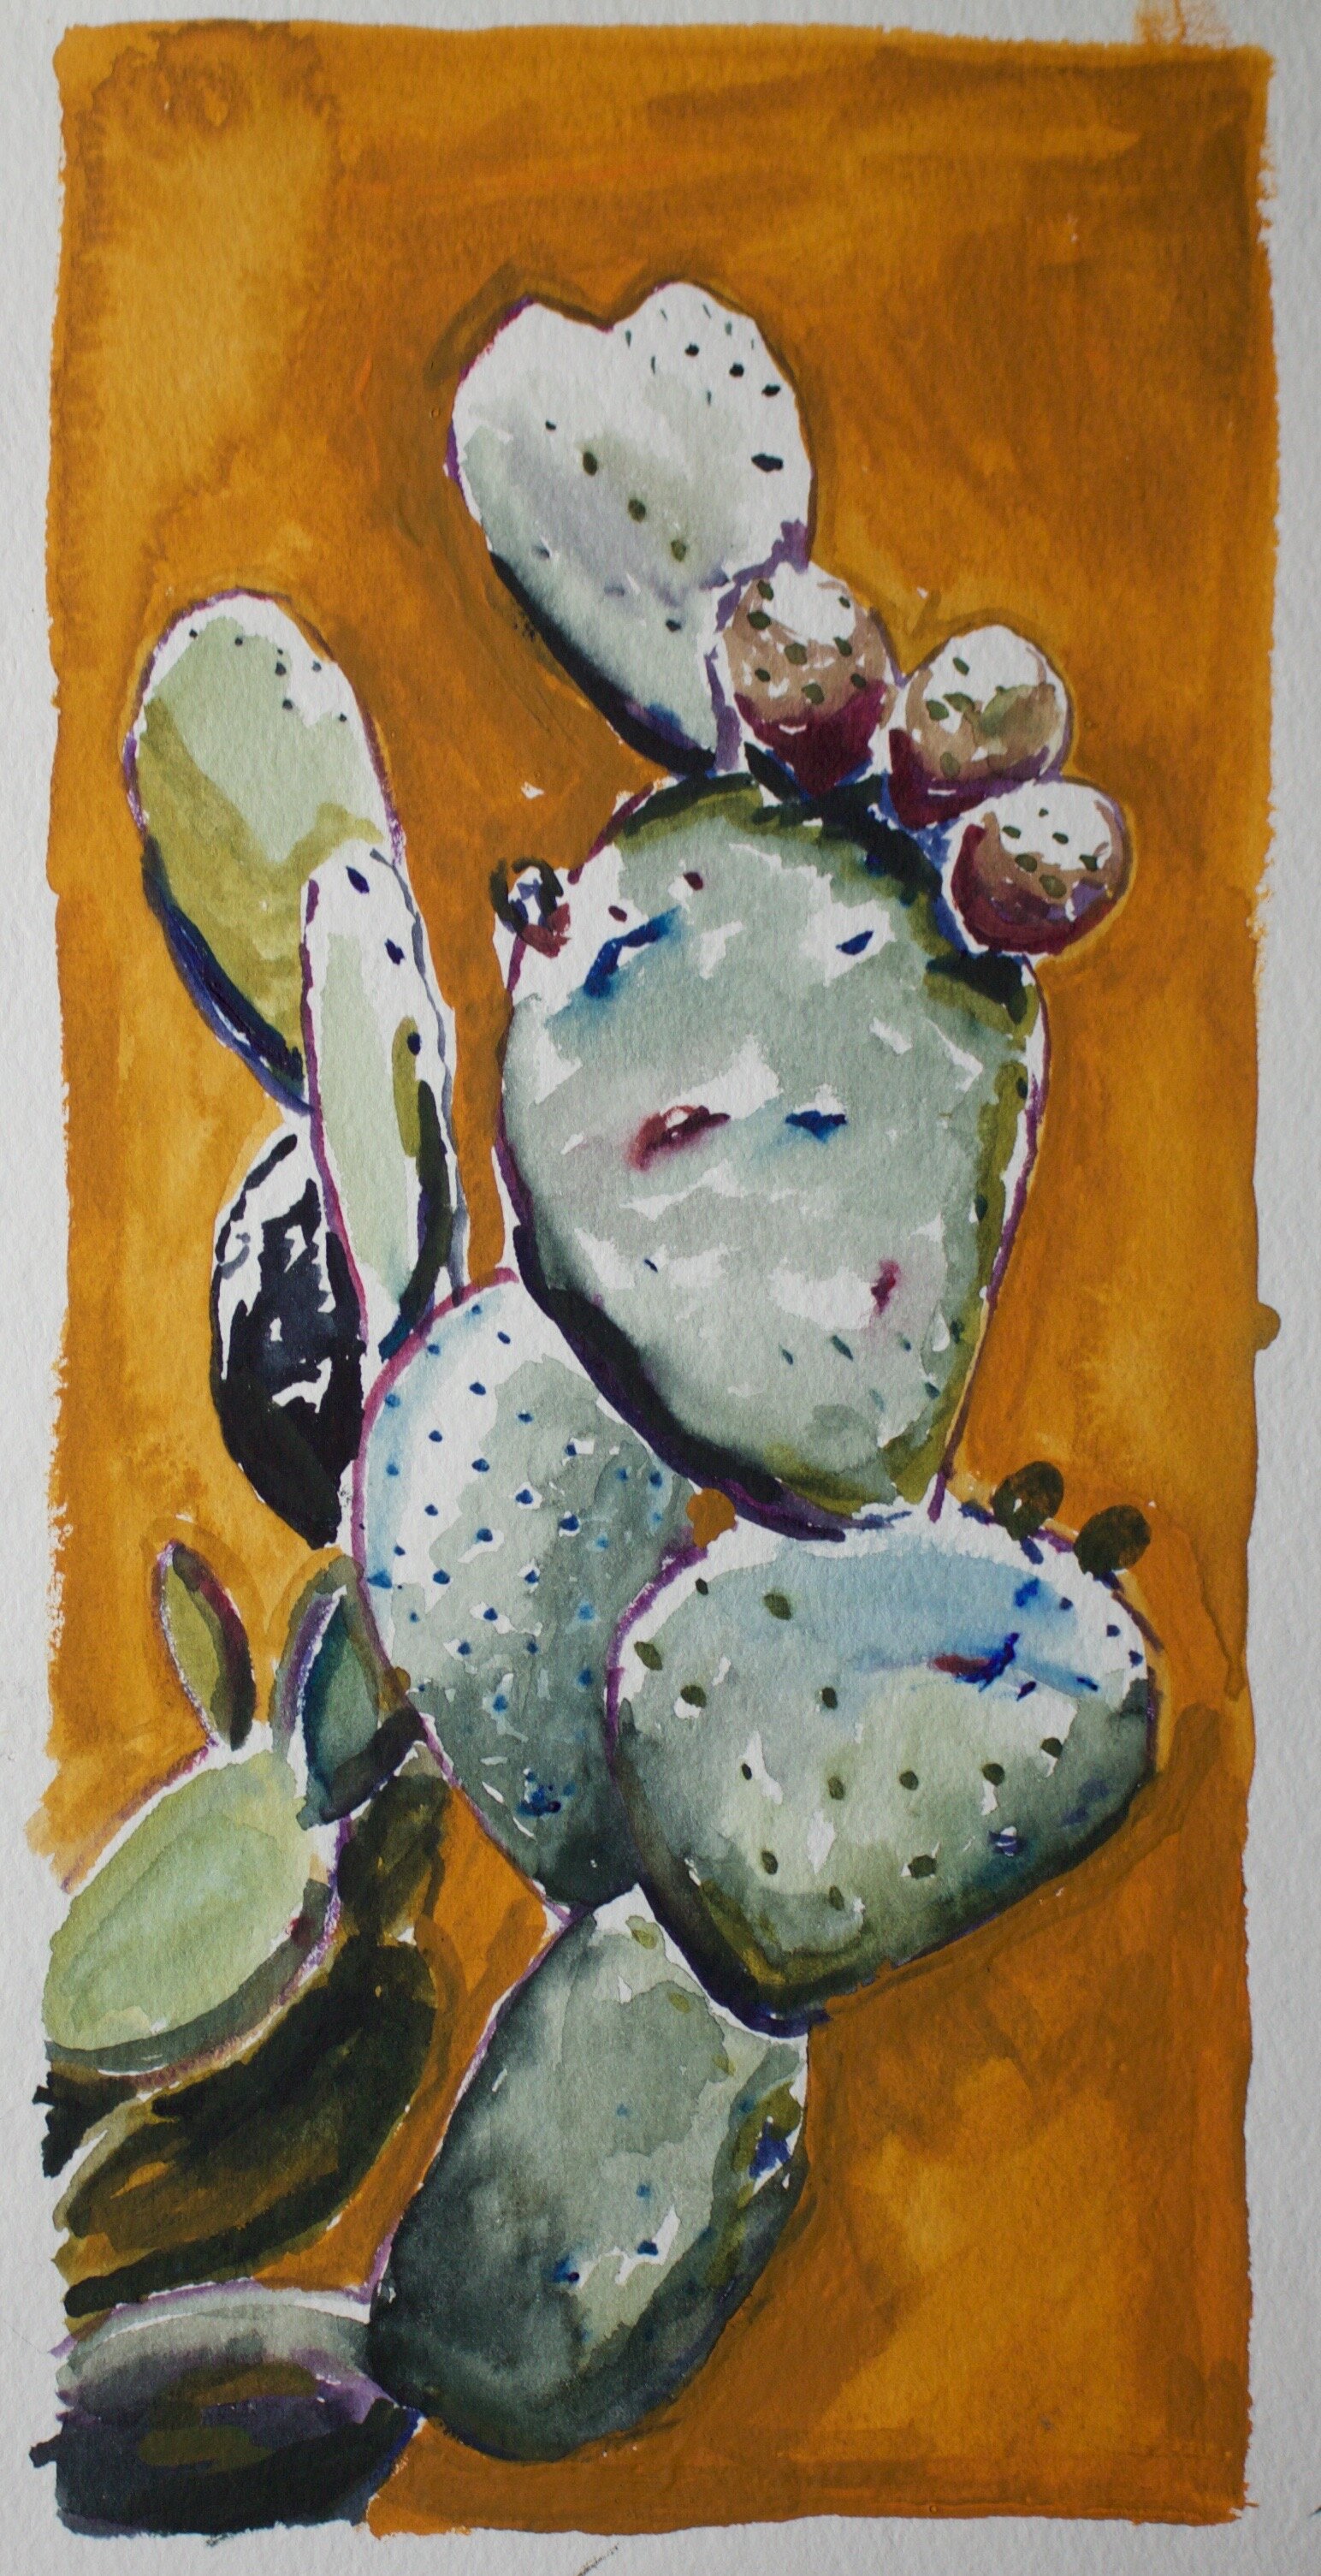 cactus 2019. 12x8in. watercolor on paper. 2019. $200.jpg